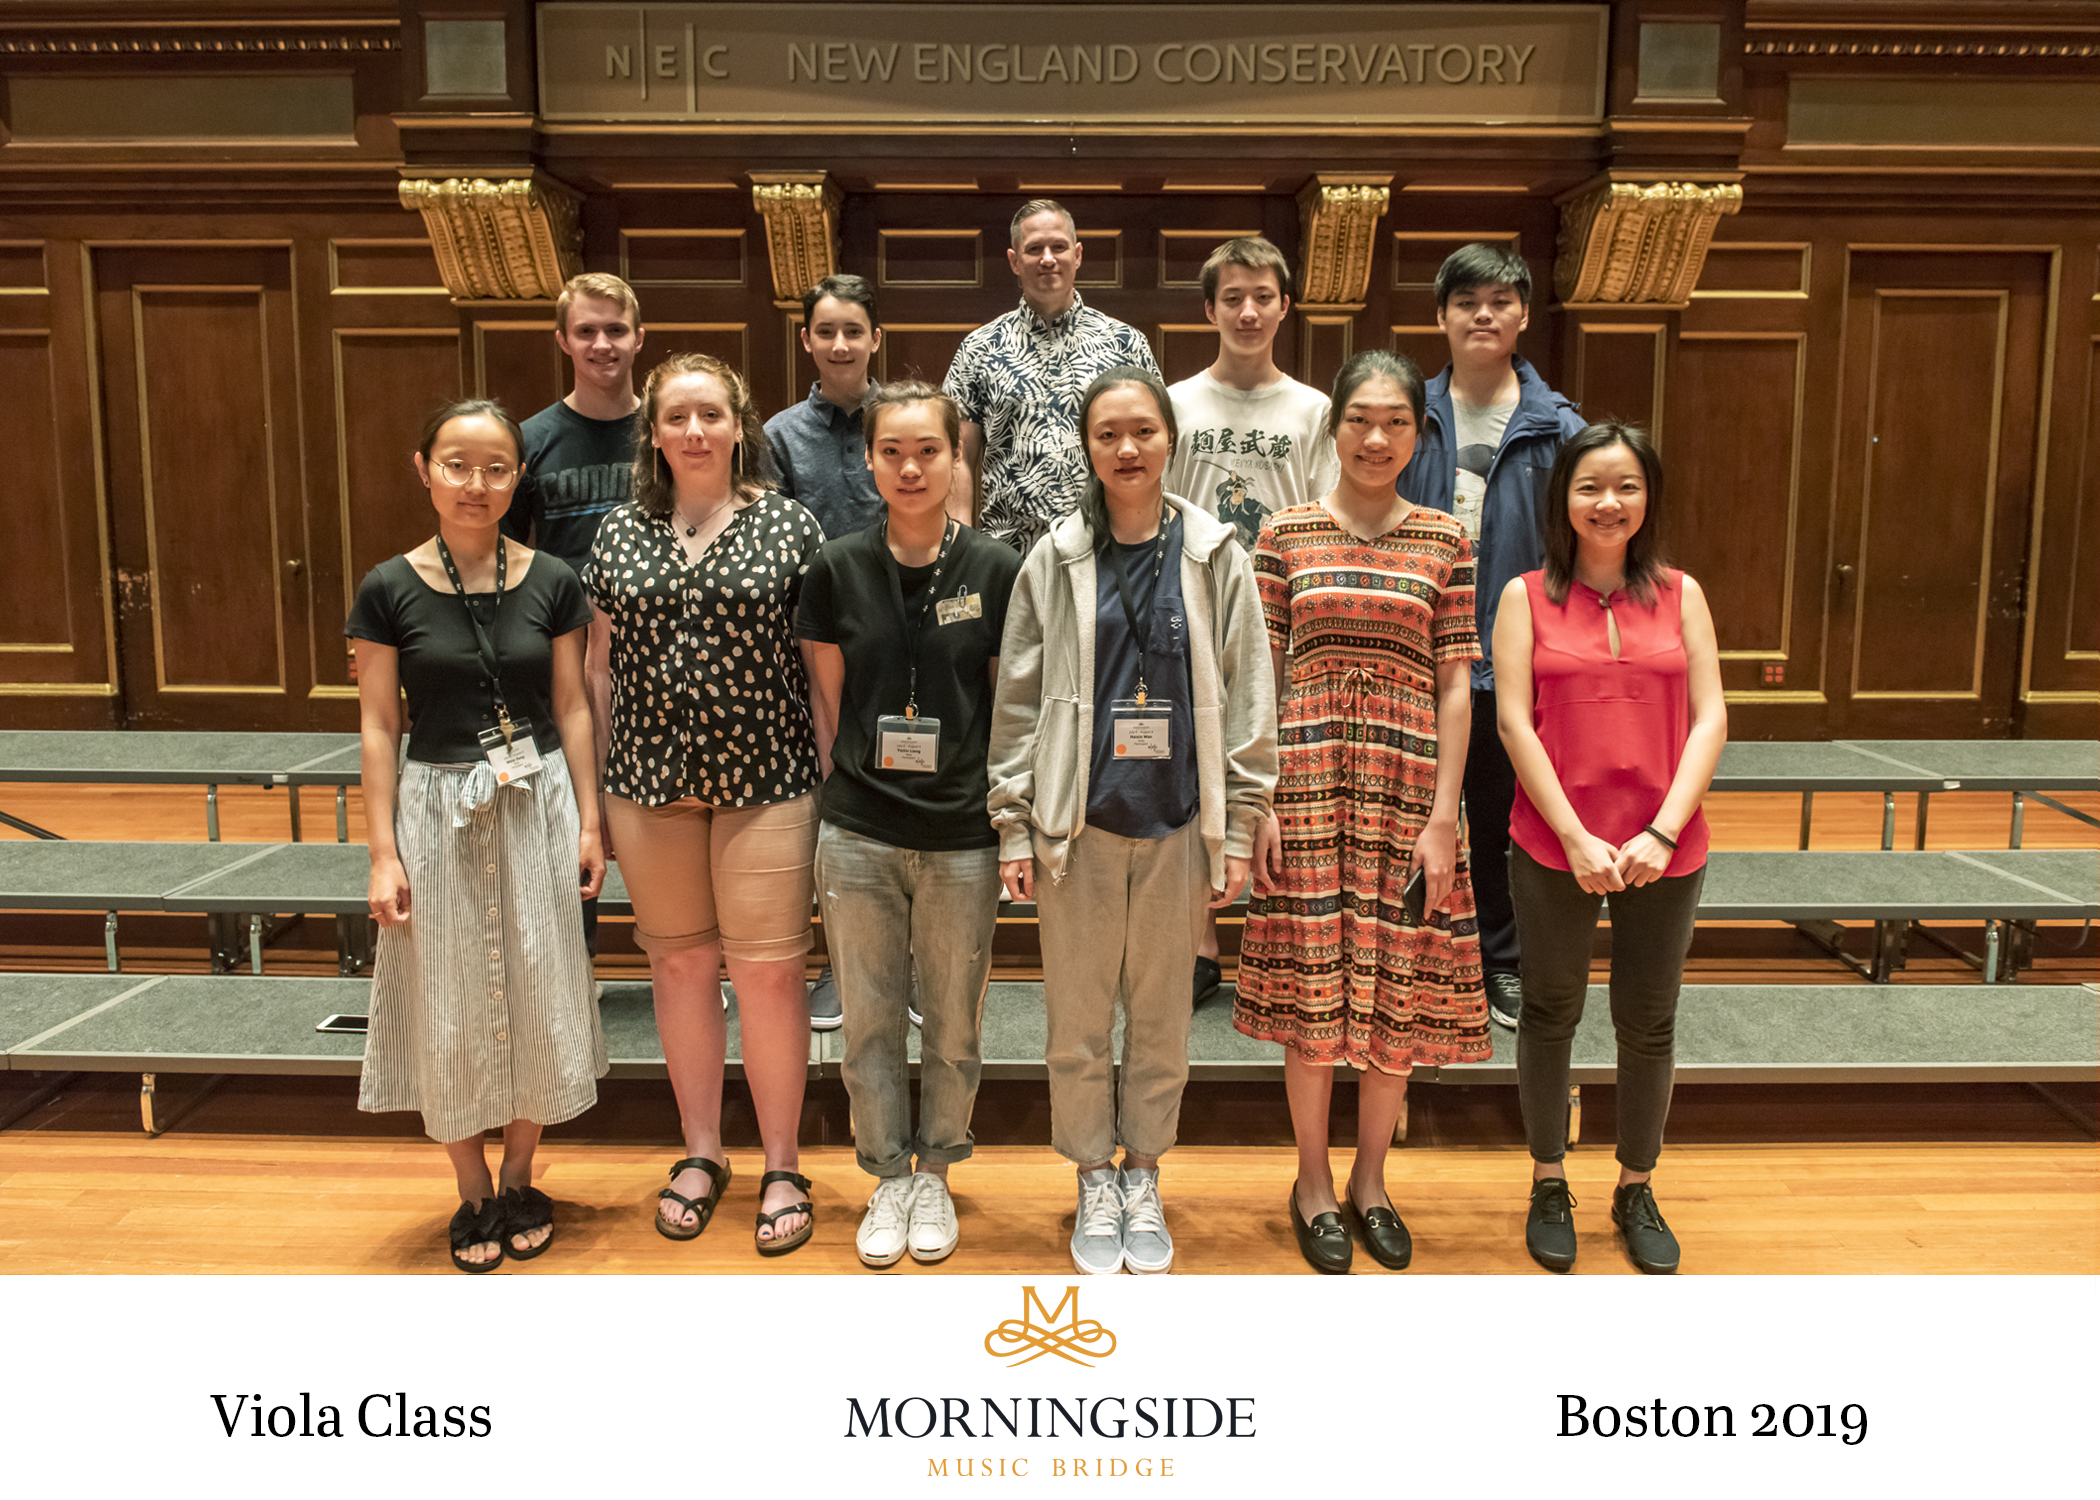 Viola Class - Boston 2019 at the New England Conservatory | Morningside Music Bridge